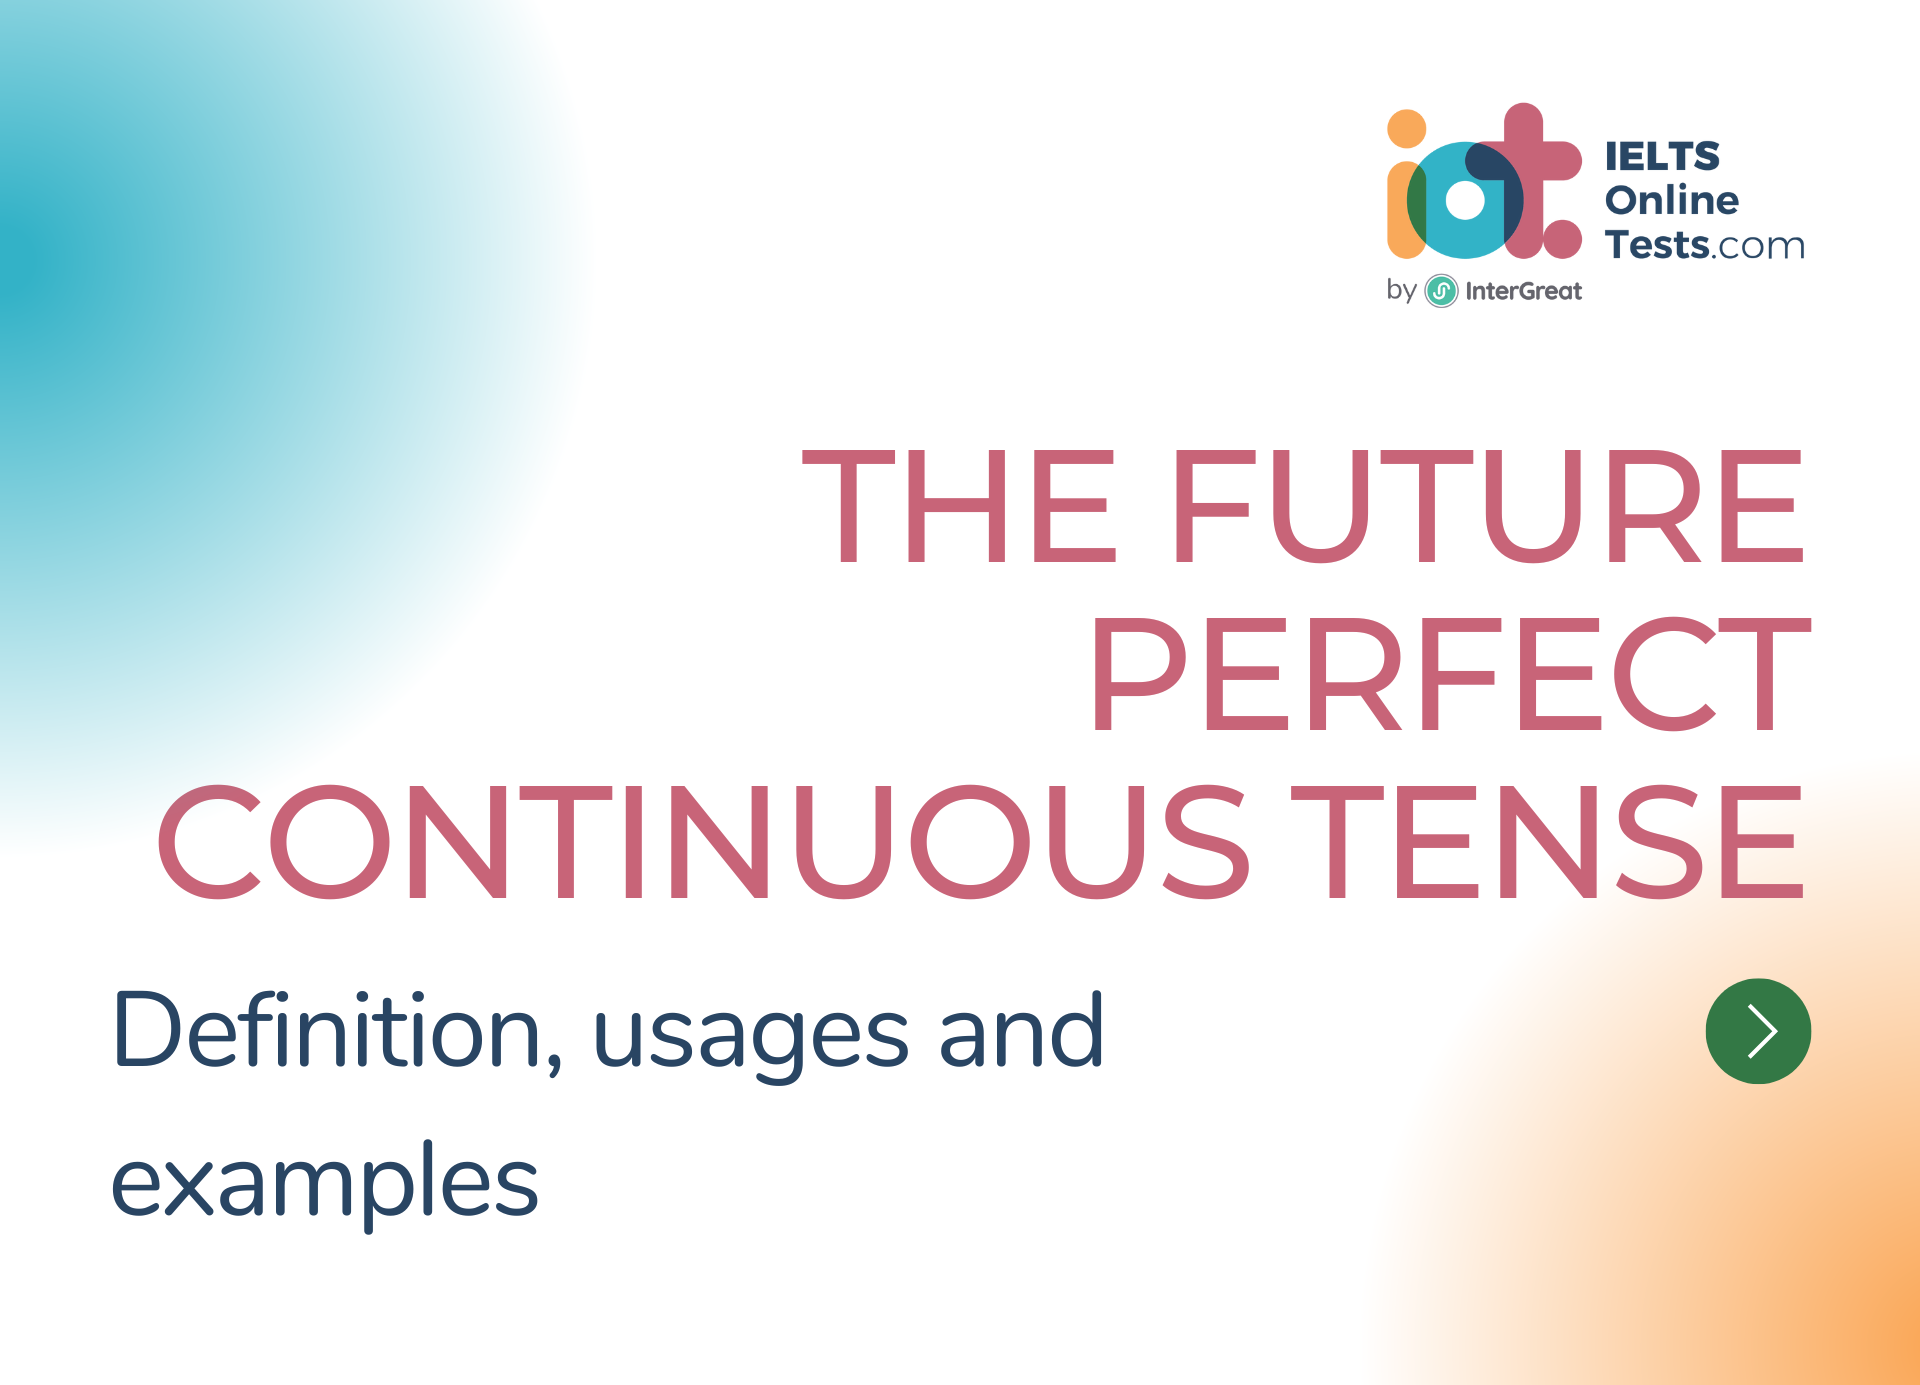 The future perfect continuous tense